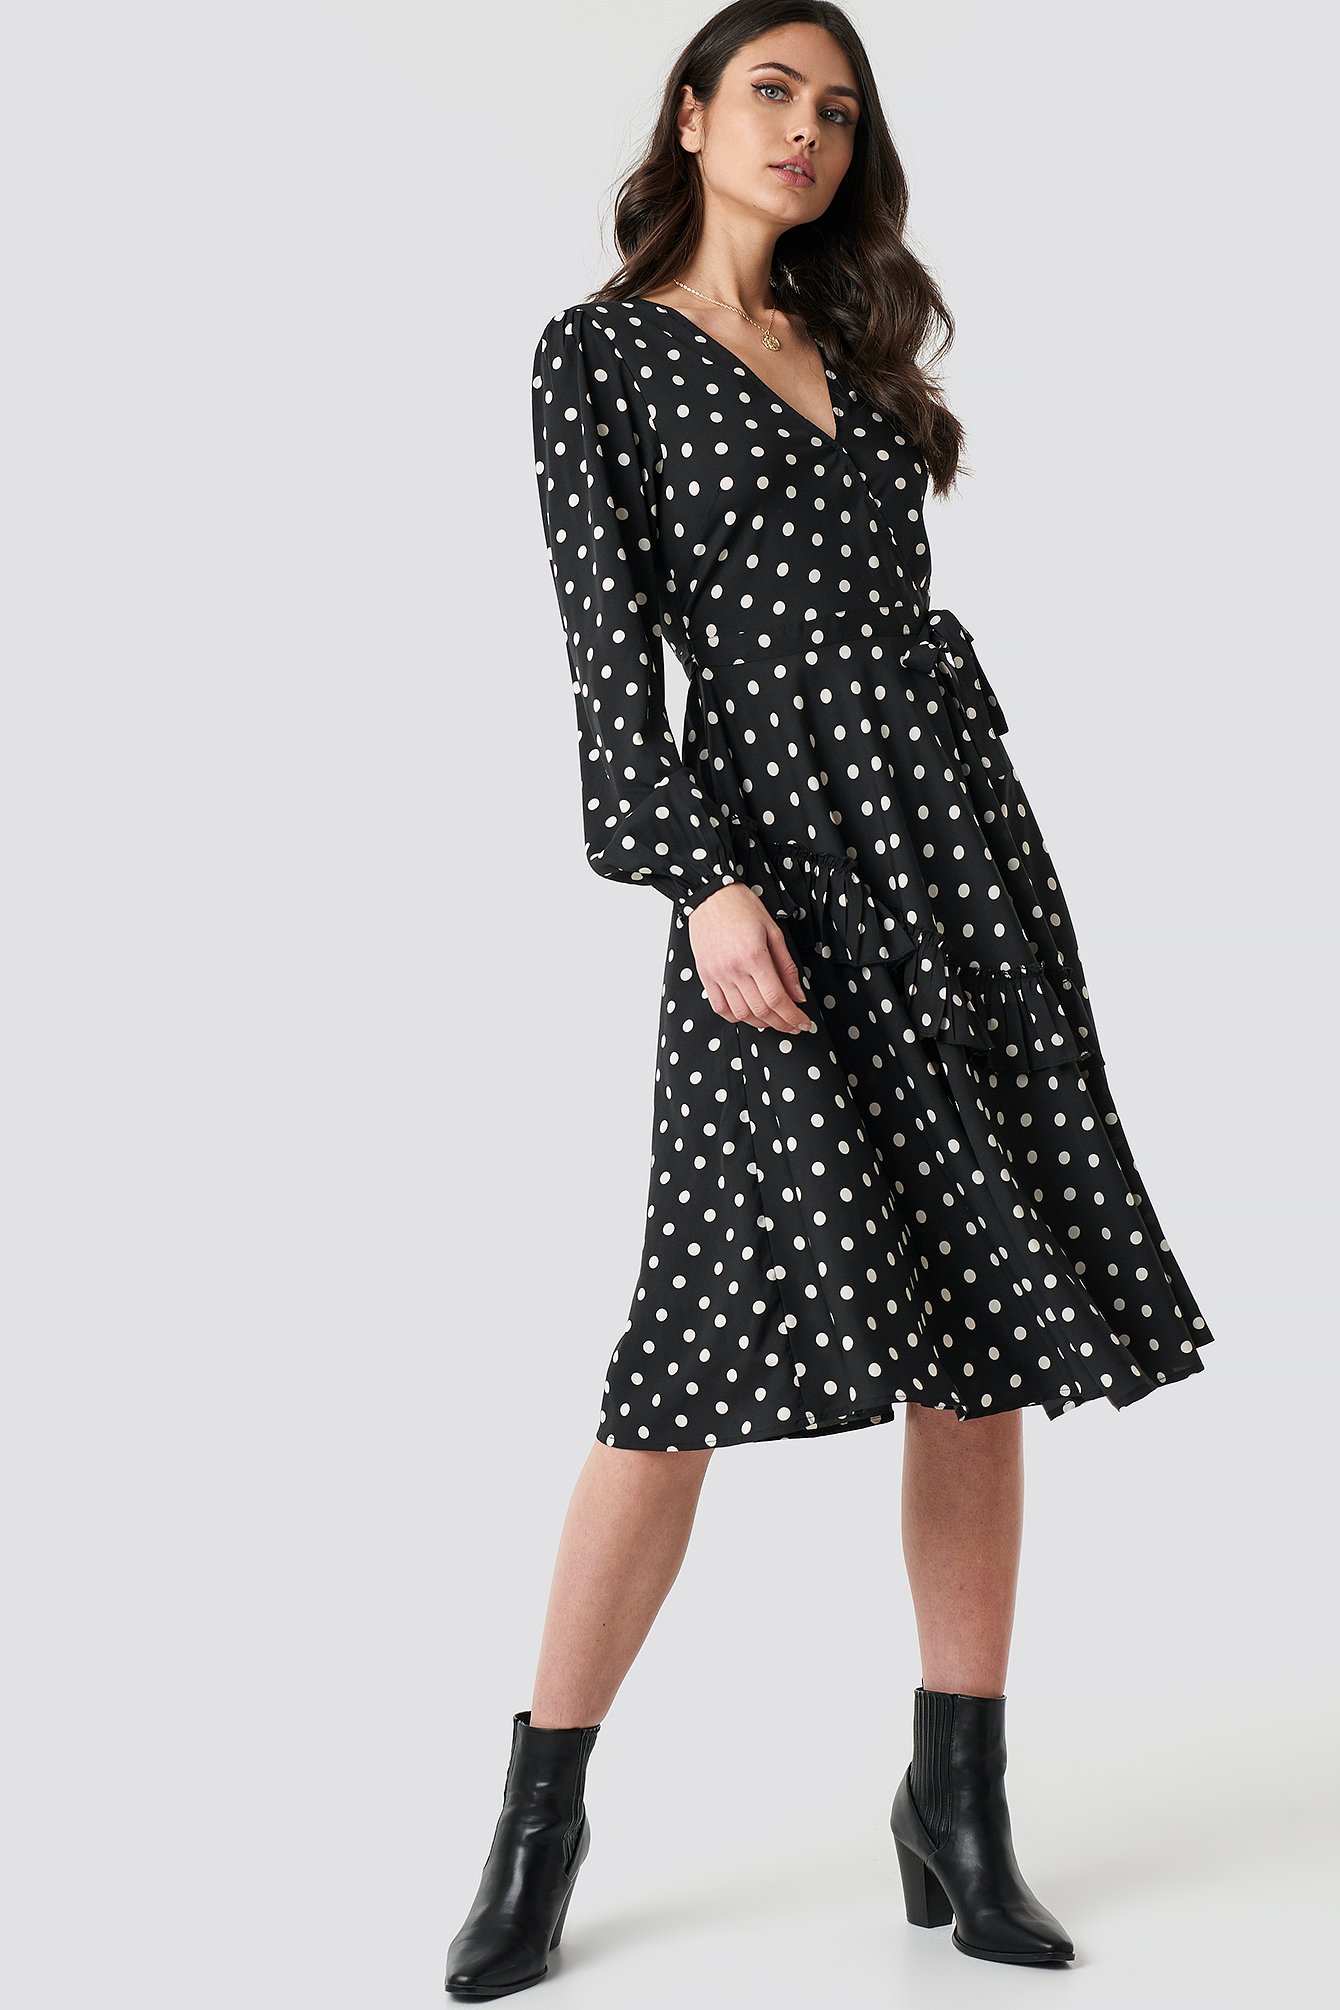 Black And White Dot Dress Online Store ...